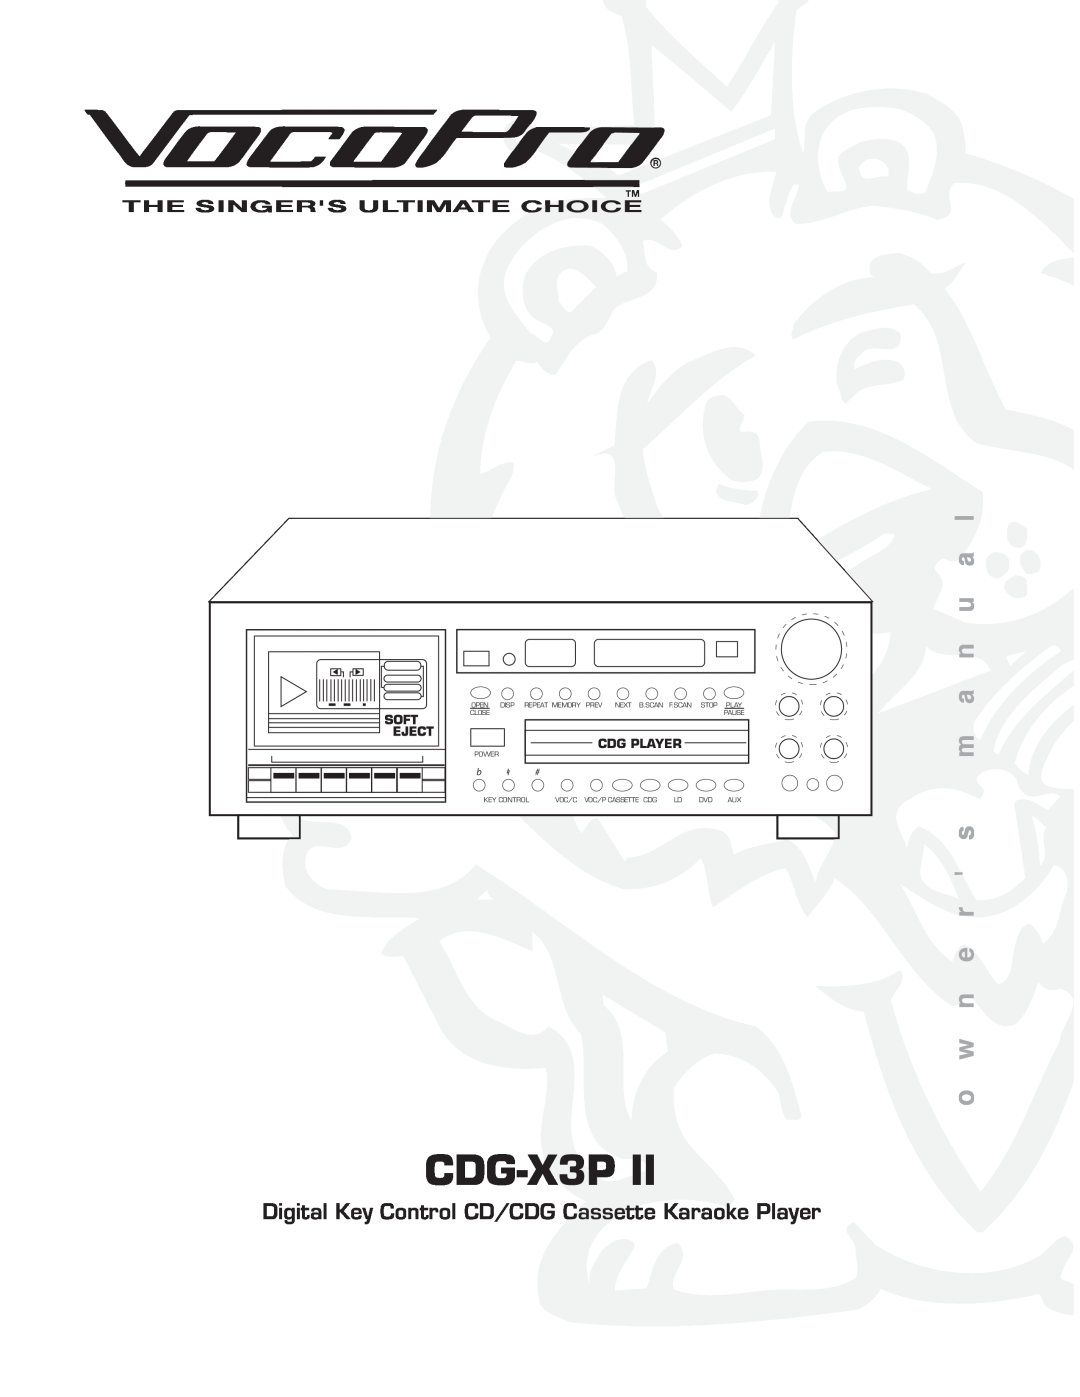 VocoPro CDG-X3P II owner manual CDG-X3PII, o w n e r s m a n u a l, The Singers Ultimate Choice, Cdg Player 